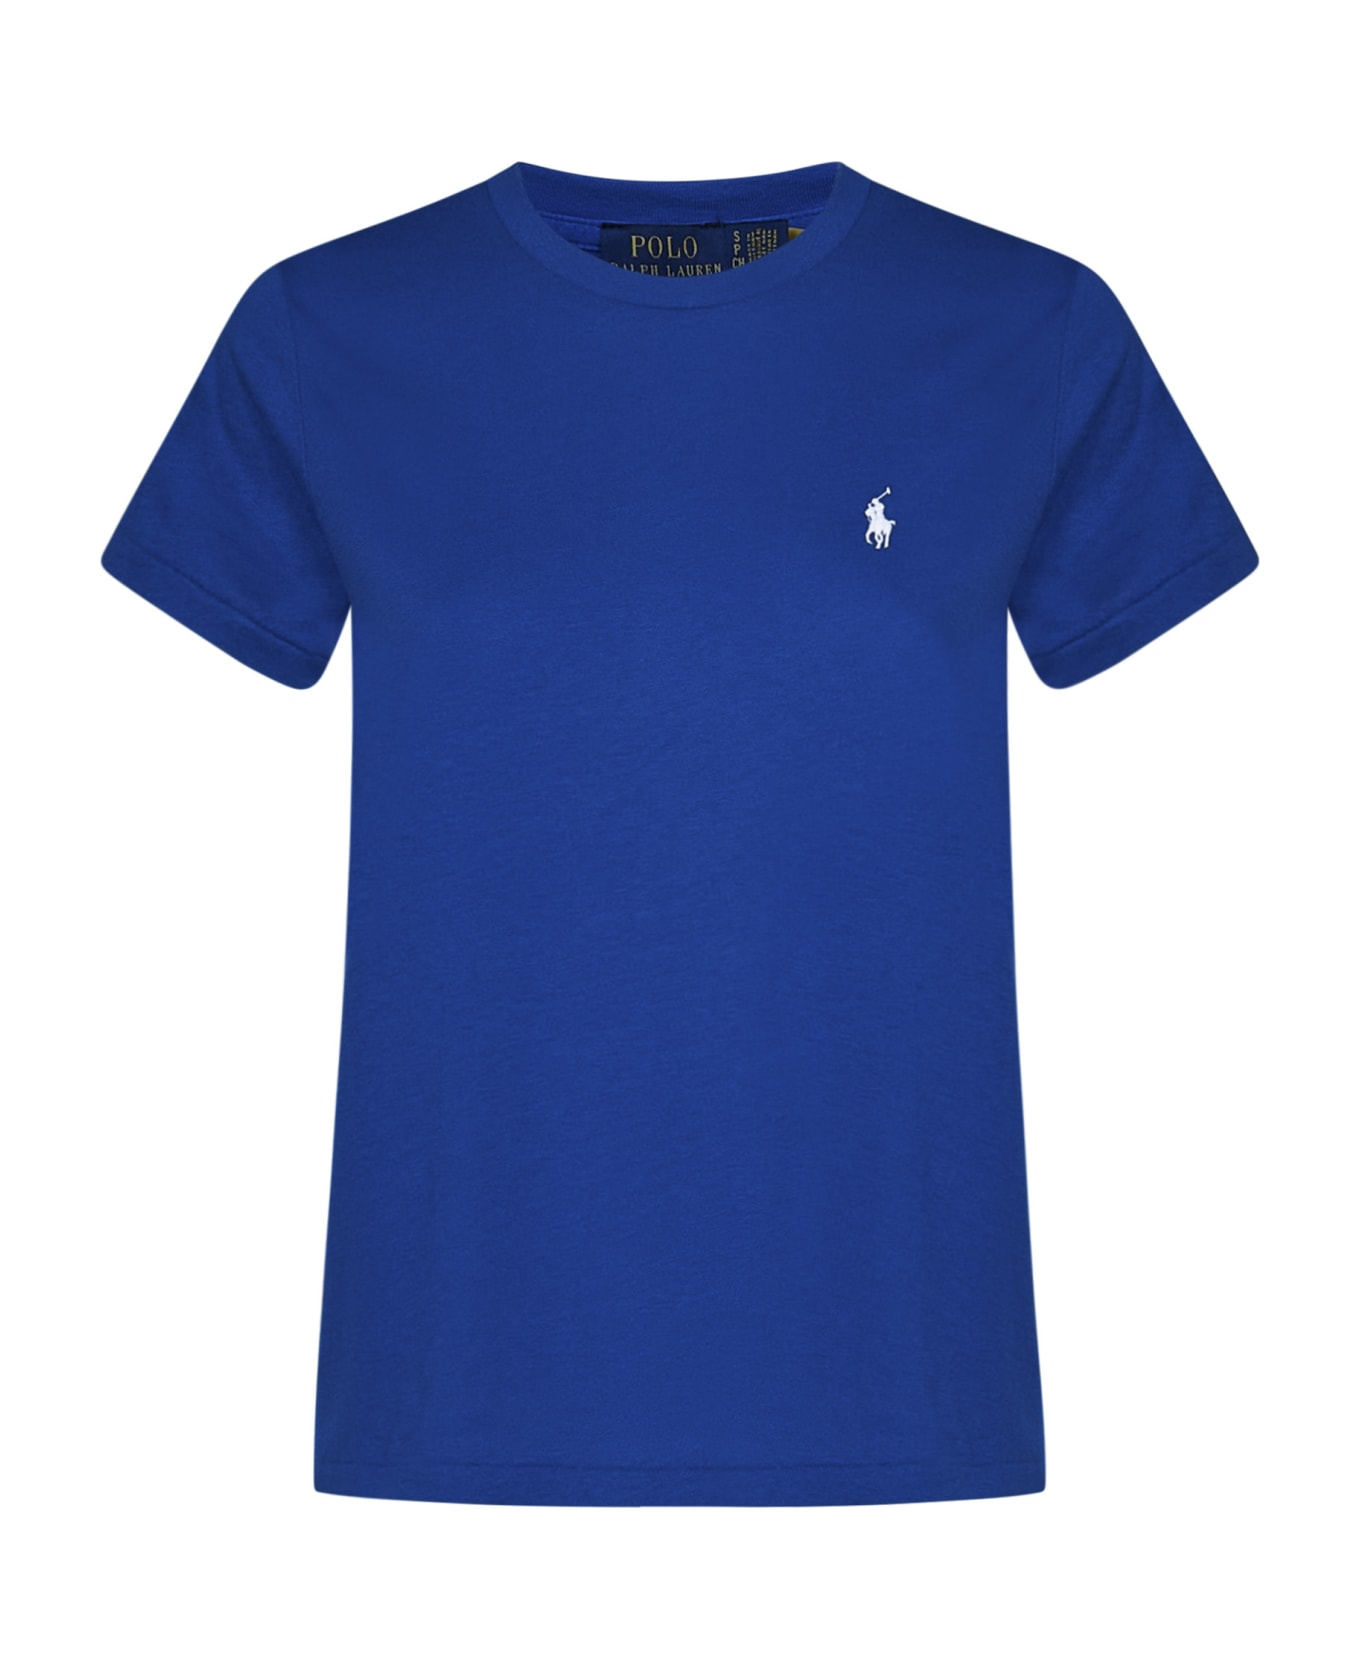 Polo Ralph Lauren Pony T-shirt - Blue Tシャツ